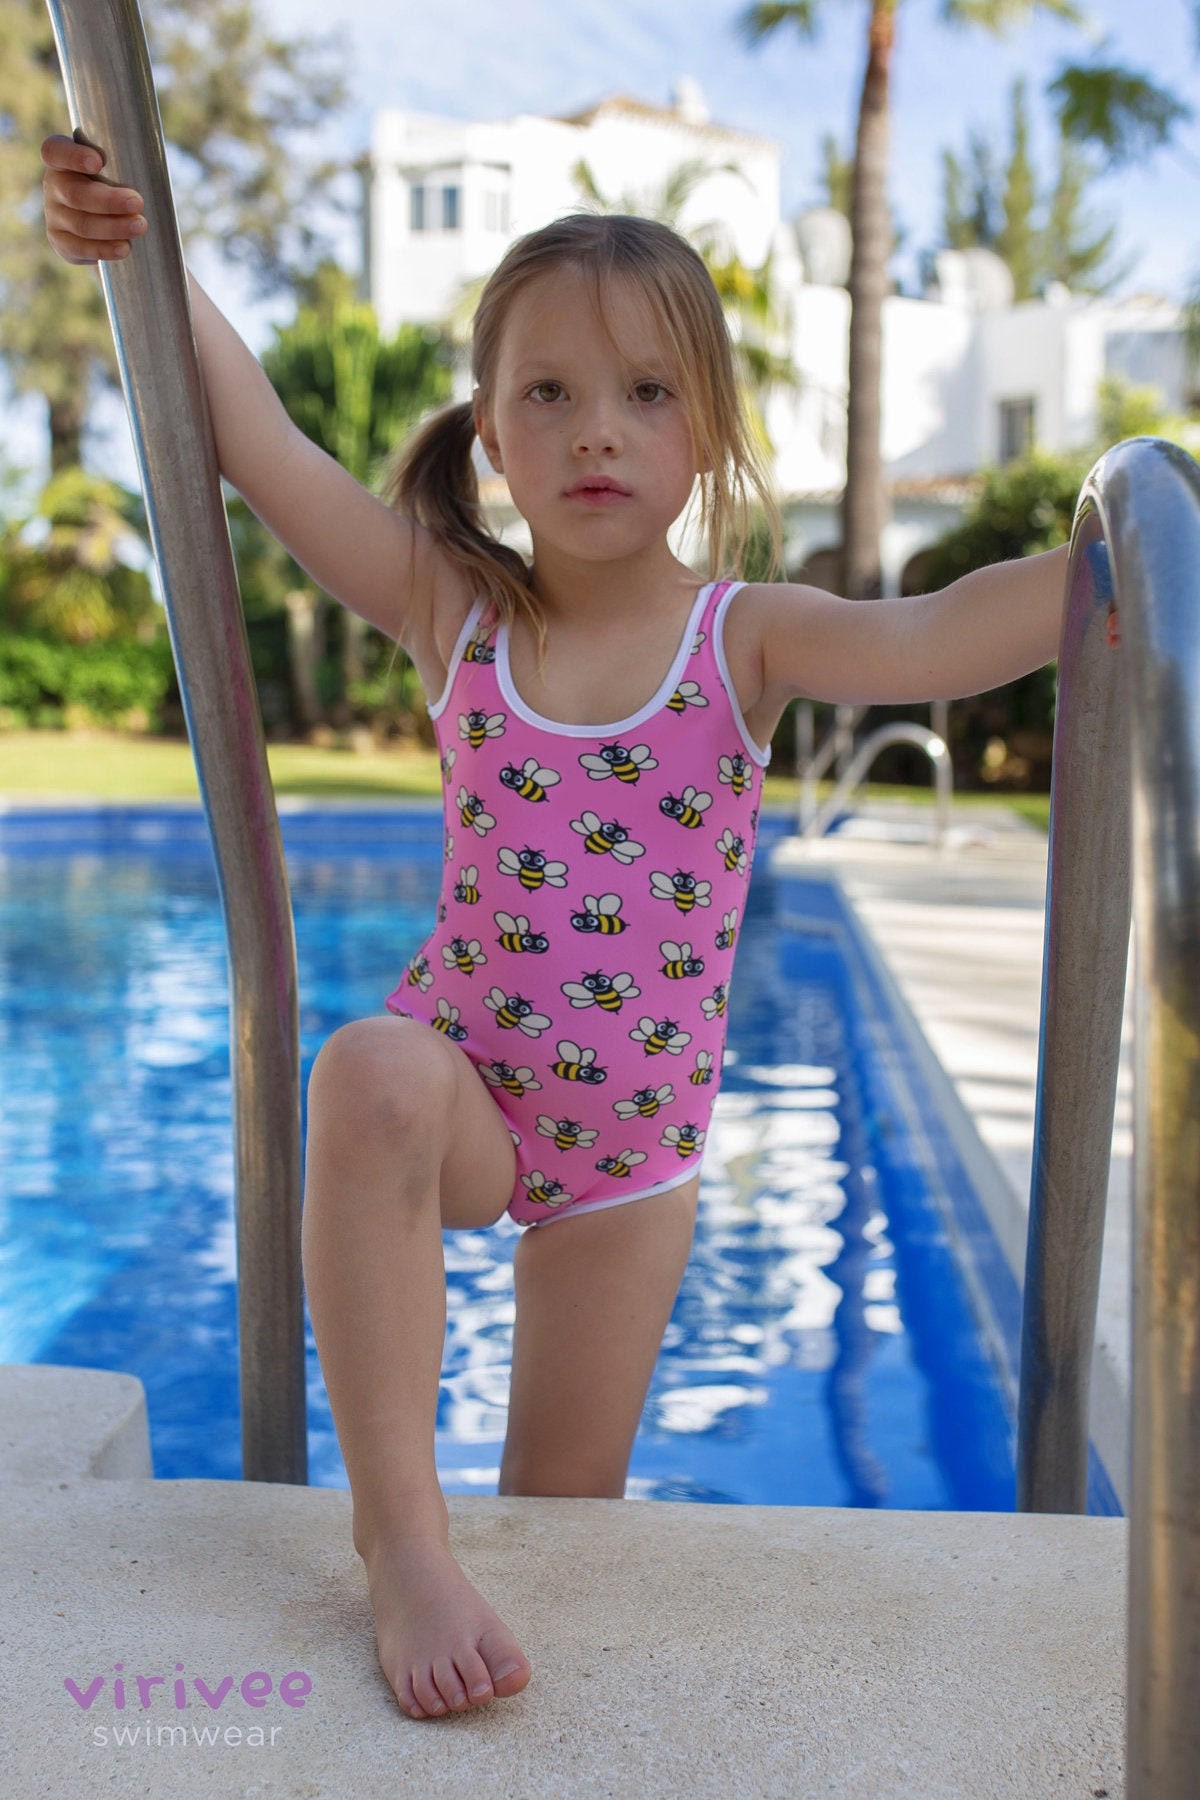 Century Star Toddler Girls One Piece Swimsuit Cute Swim Suit for Kids Girls Bathing Suits for Girls Beach Swimwear 